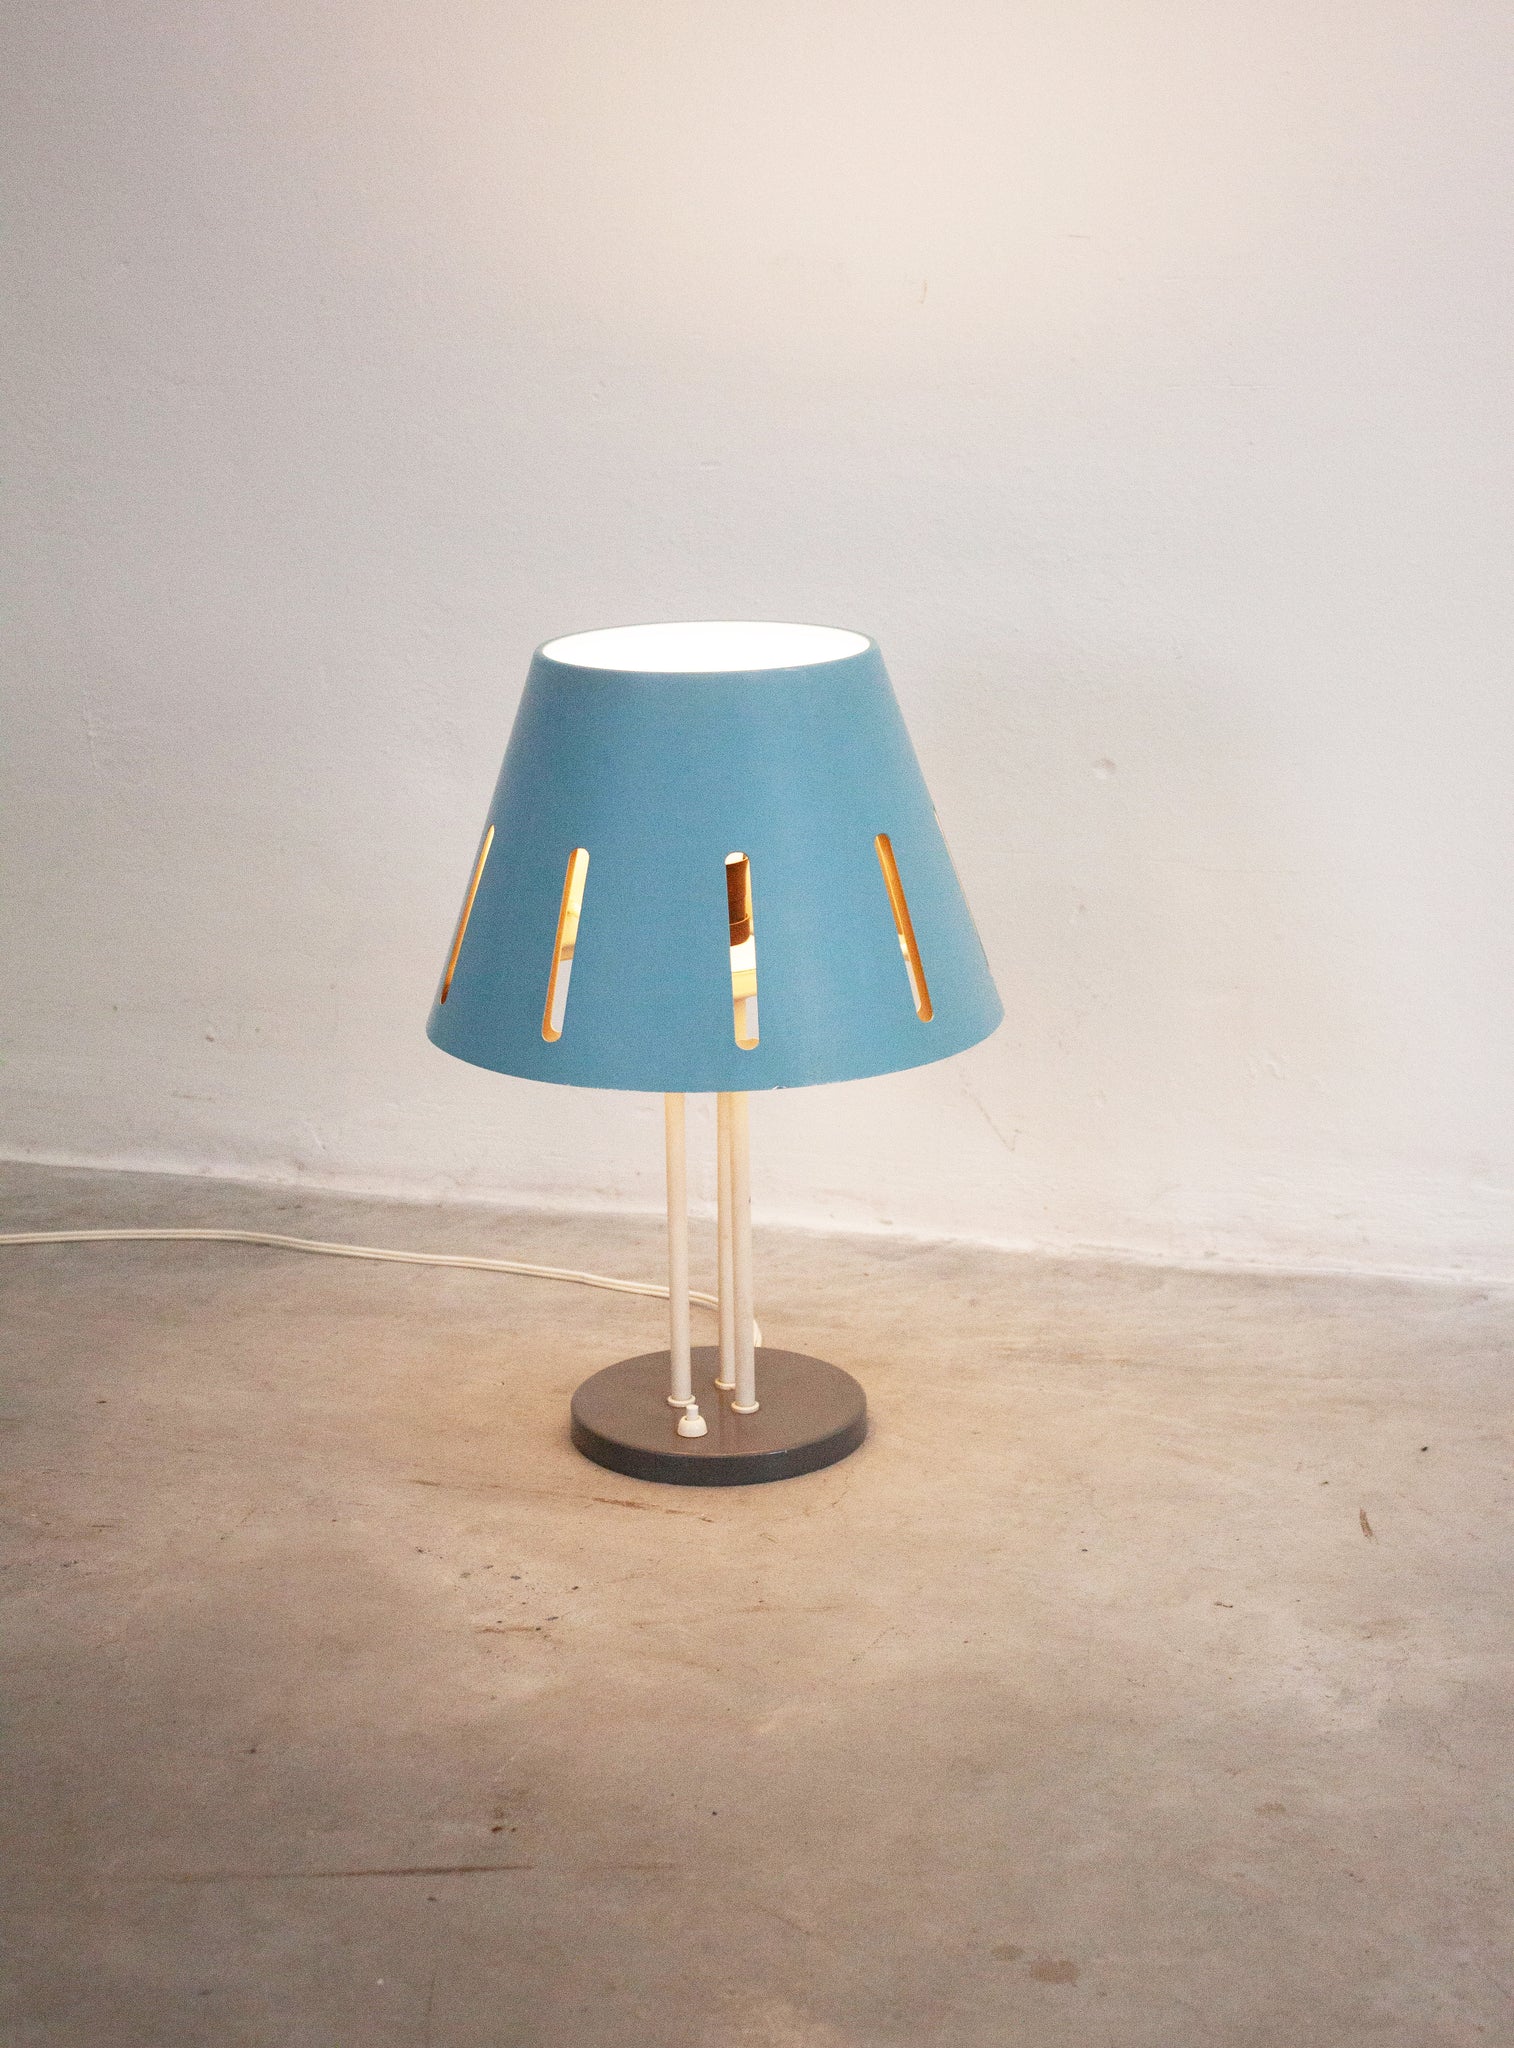 Hala 'Zonneserie' Model 9 Desk Lamp by H. Busquet (Light Blue)